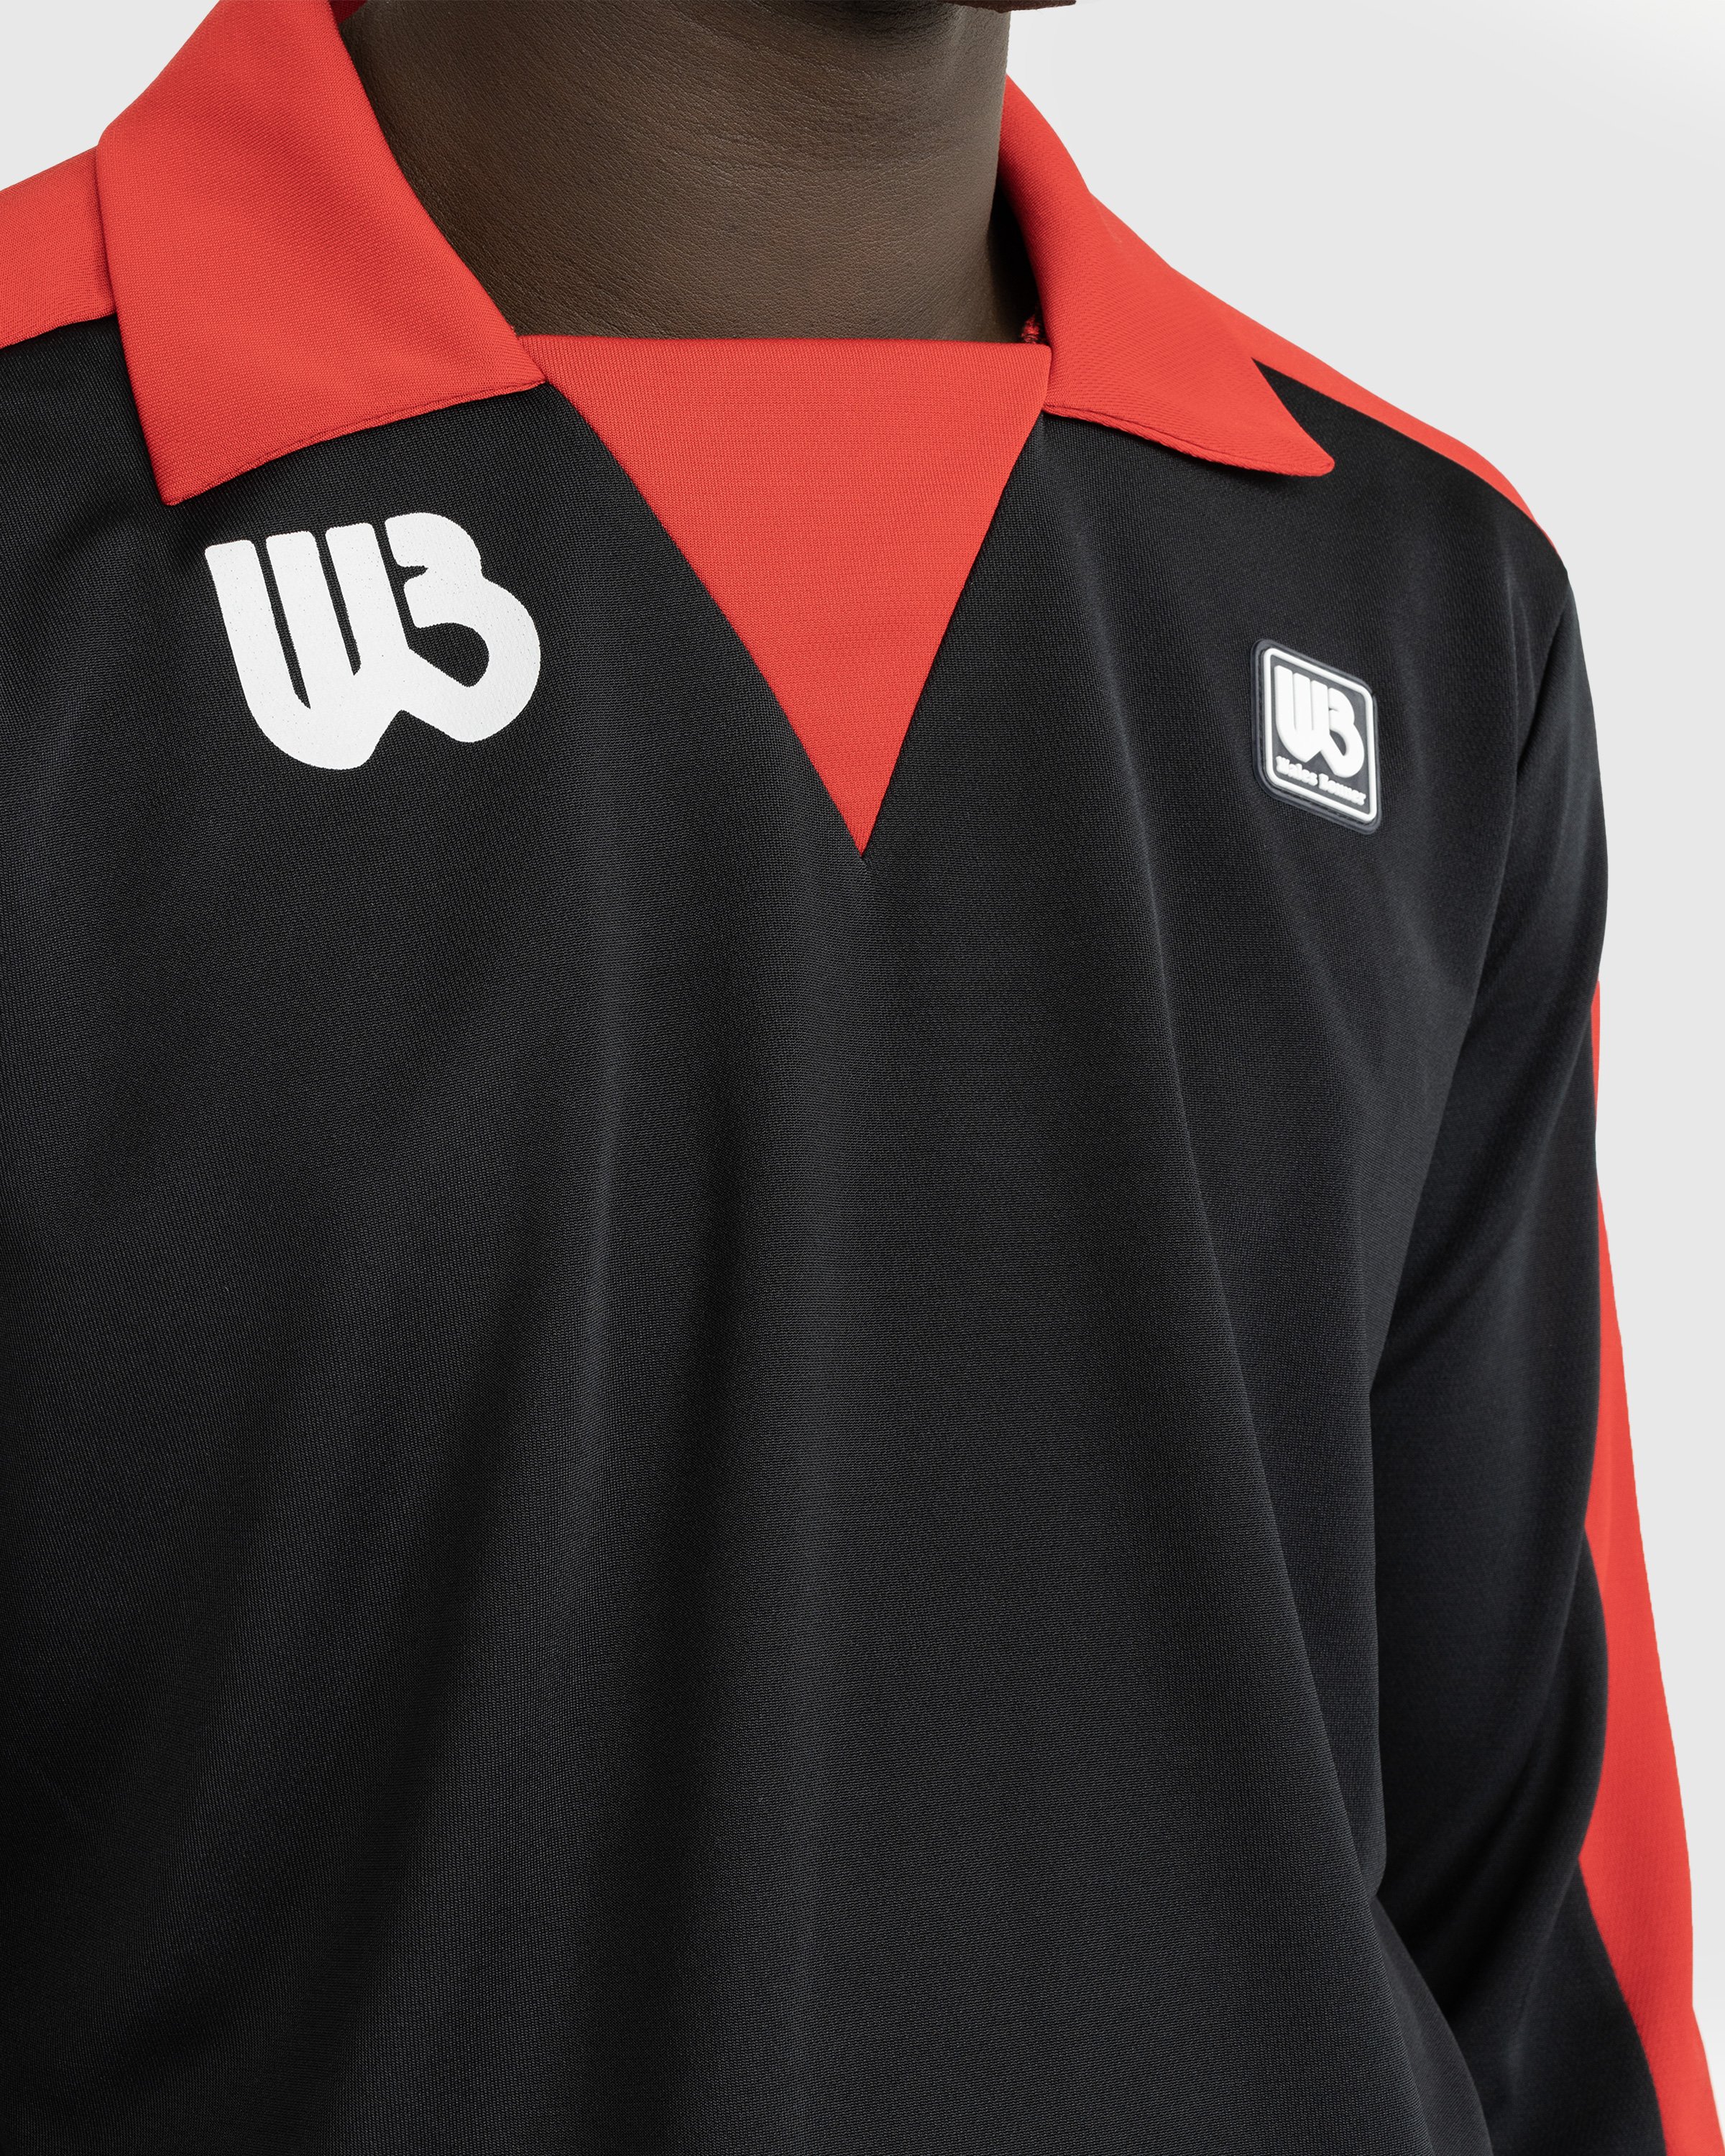 Wales Bonner - Home Jersey Shirt Black/Red - Clothing - Black - Image 5